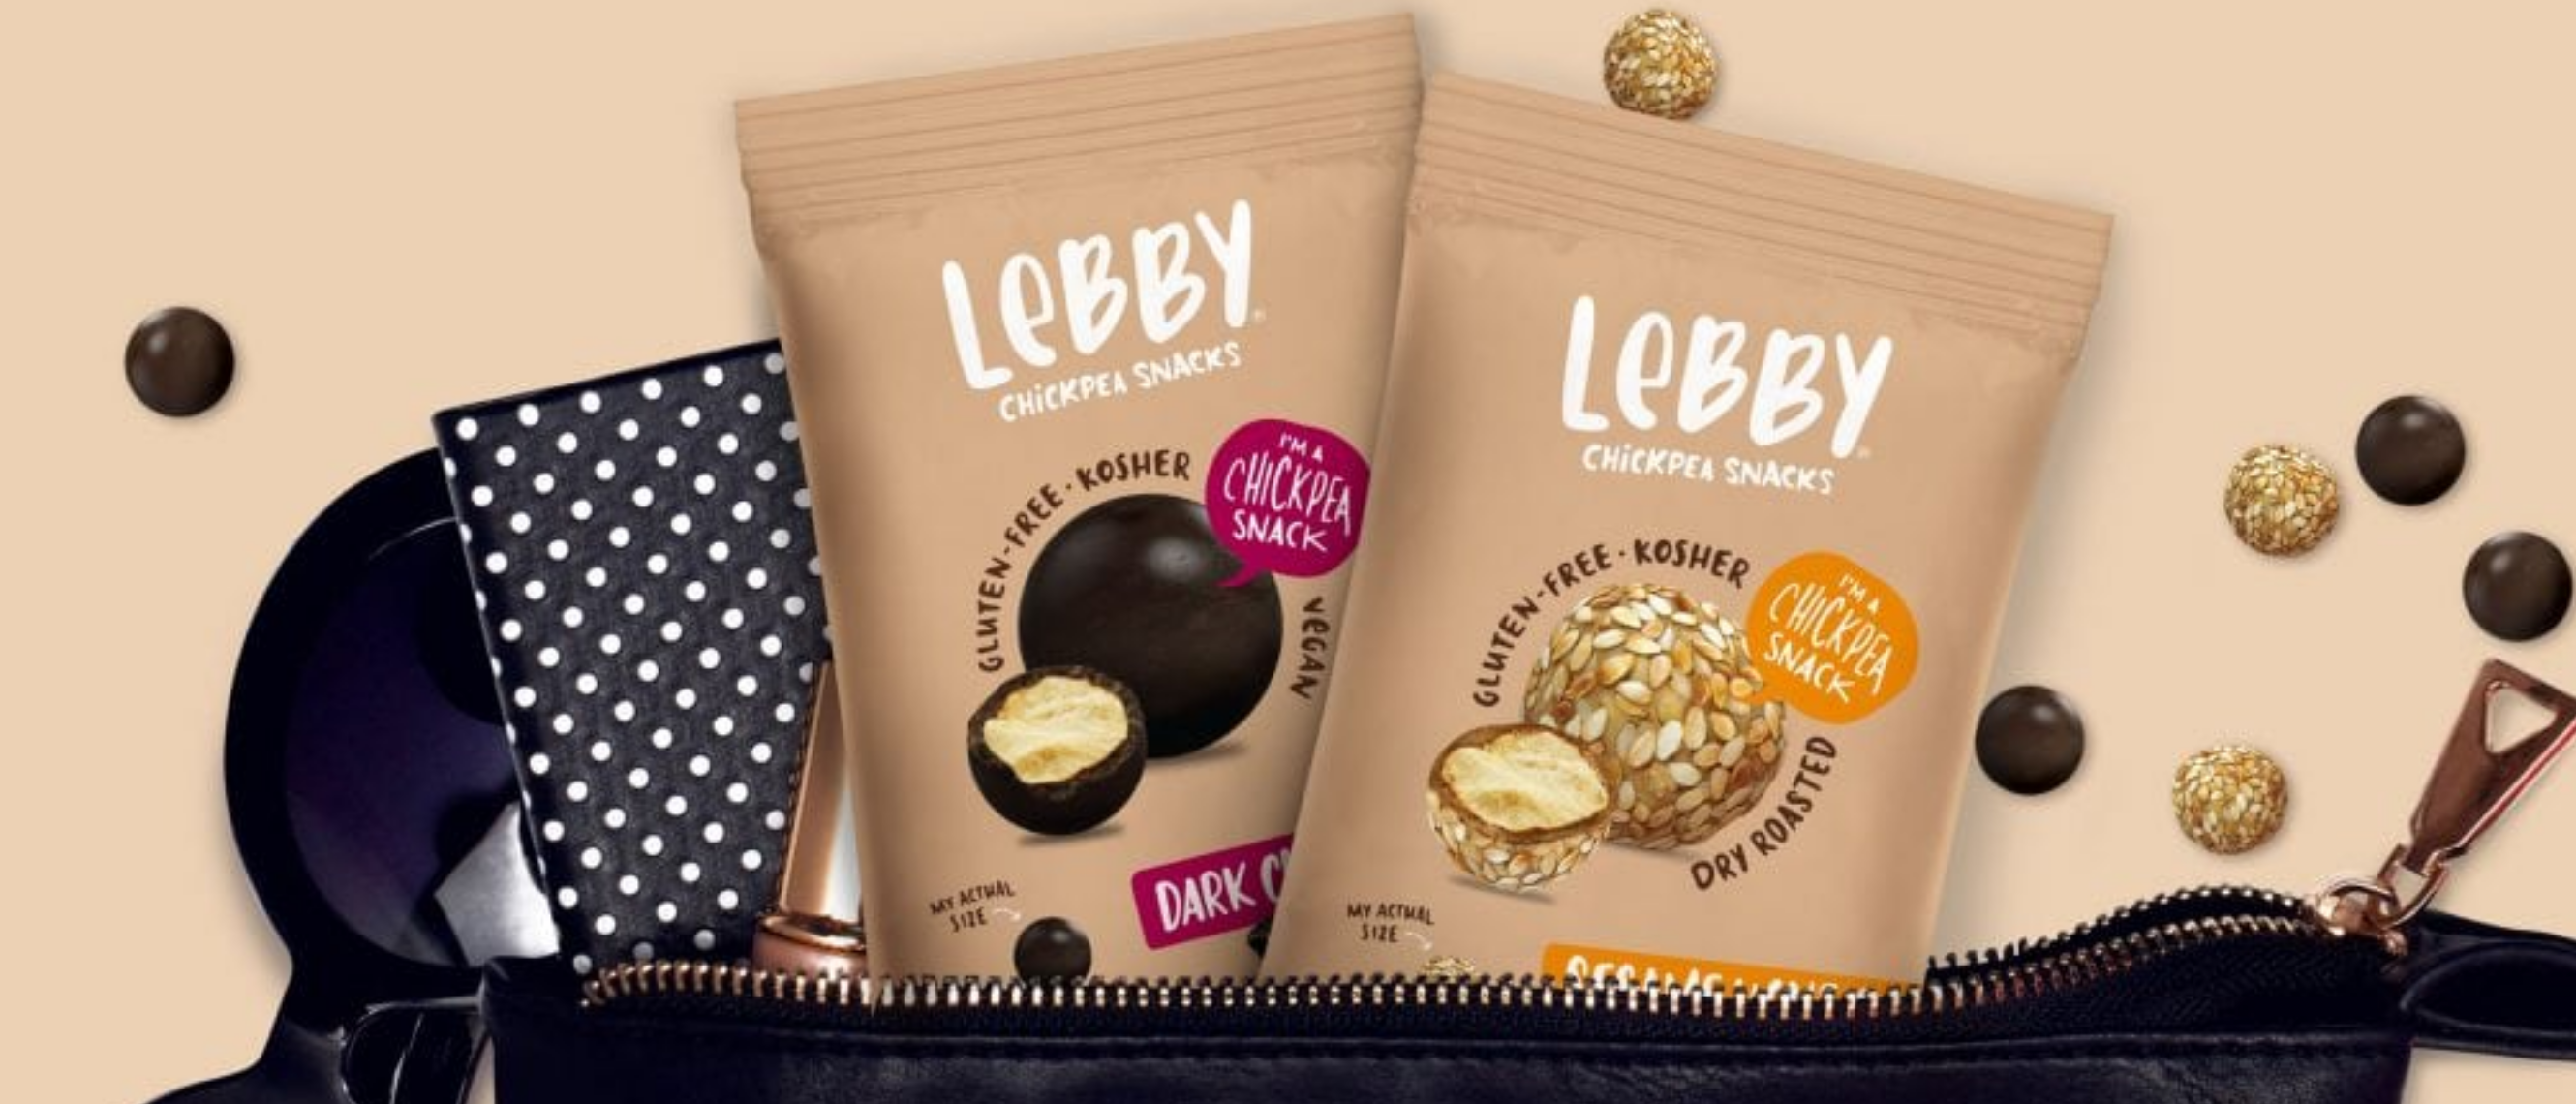 Lebby Snacks chocolate covered chickpeas inside the Oh Goodie snack box 